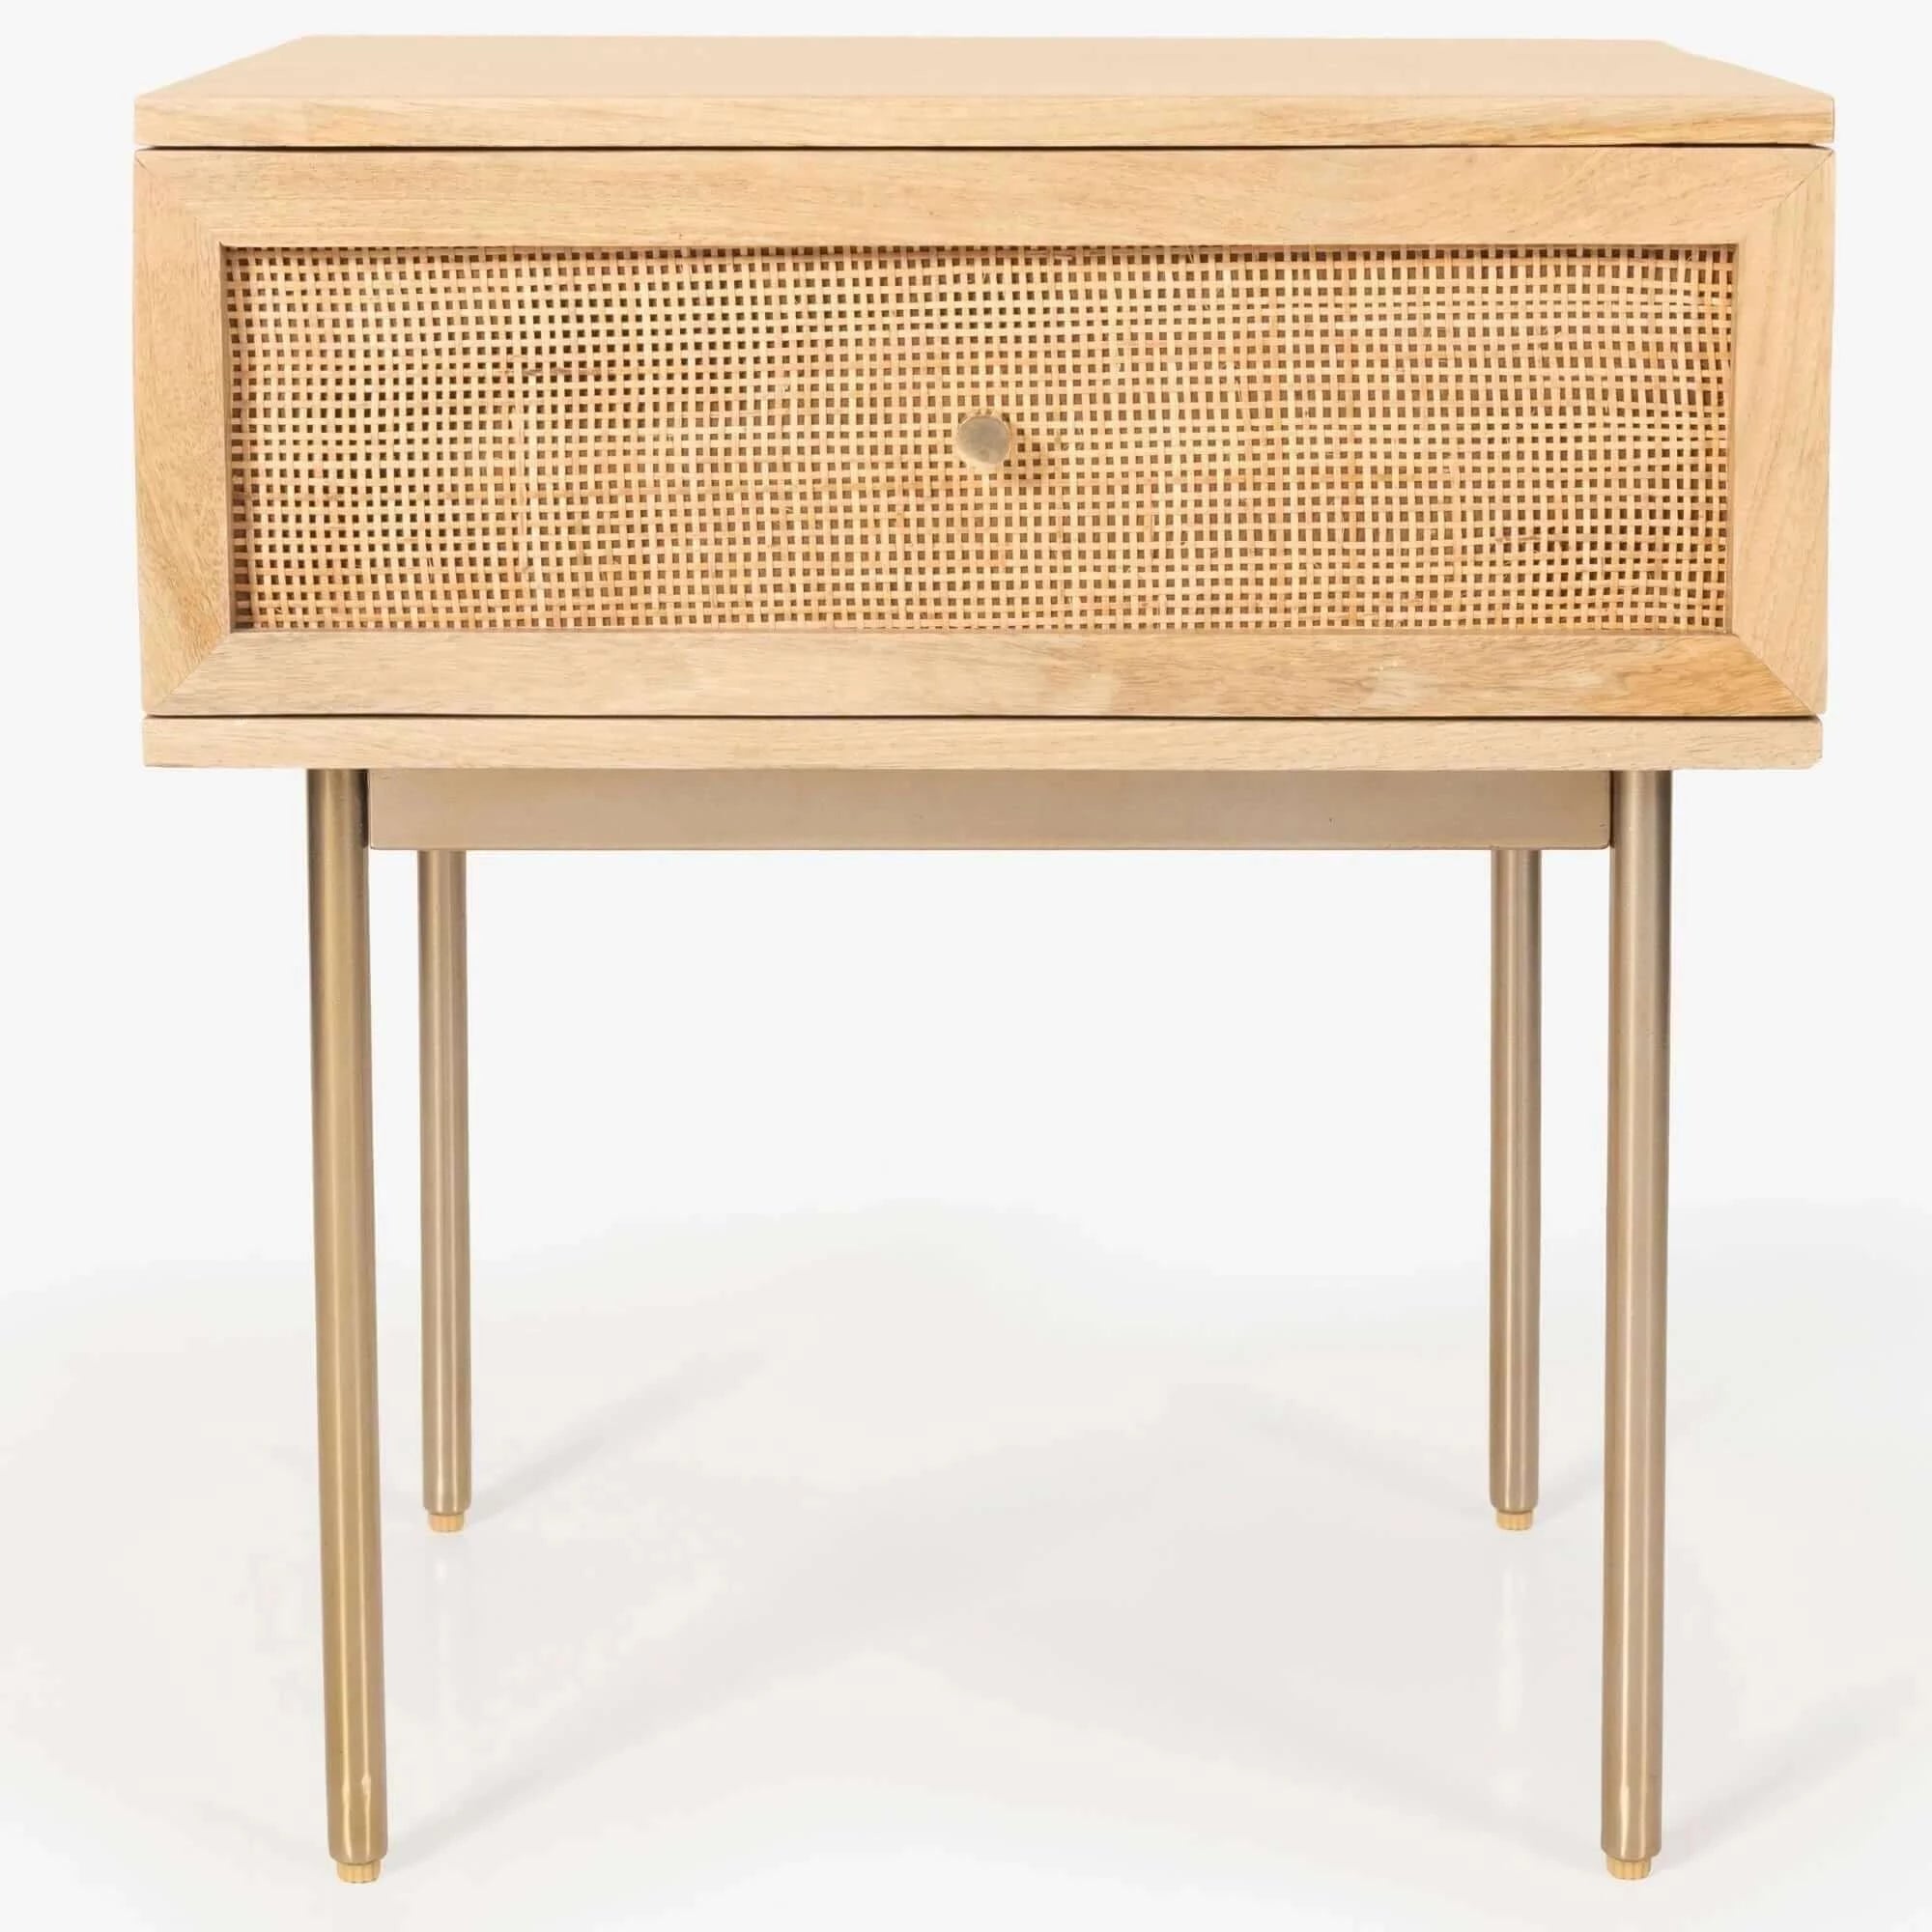 Buy martina set of 2 bedside table 1 drawer storage cabinet solid mango wood rattan - upinteriors-Upinteriors